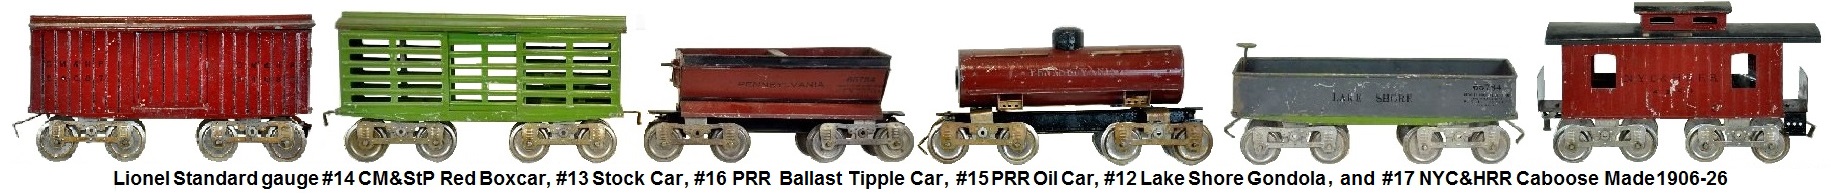 Lionel Standard gauge #14 CM&StP Red Boxcar, #13 stock car, #16 PRR ballast tipple car, #15 PRR Oil Tank Car, #12 Lake Shore Gondola, and #17 NYC&HRR Caboose made 1906-26